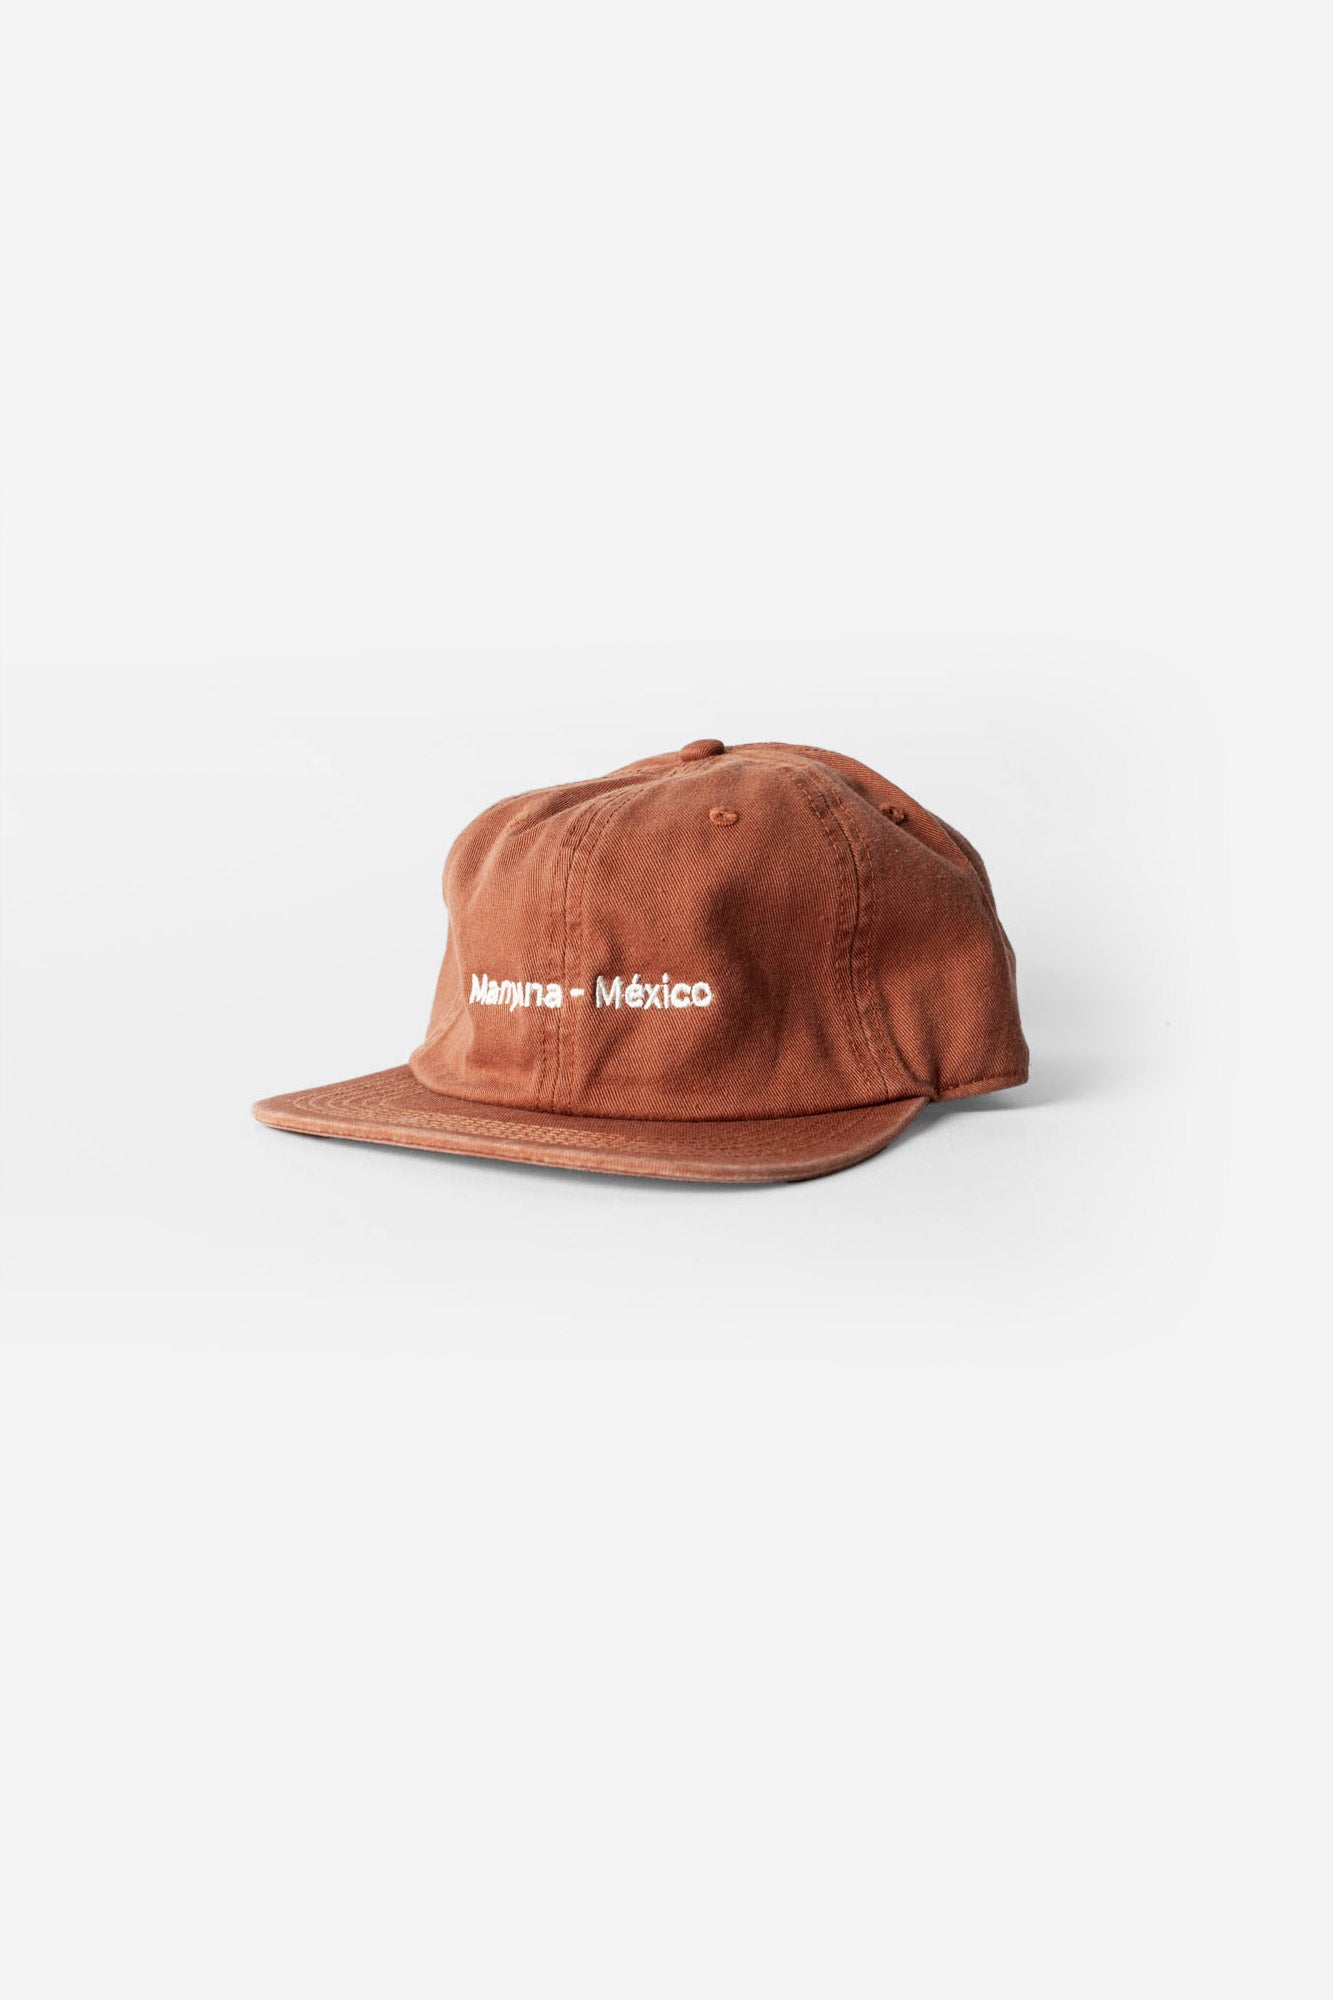 Manyana - México Hat